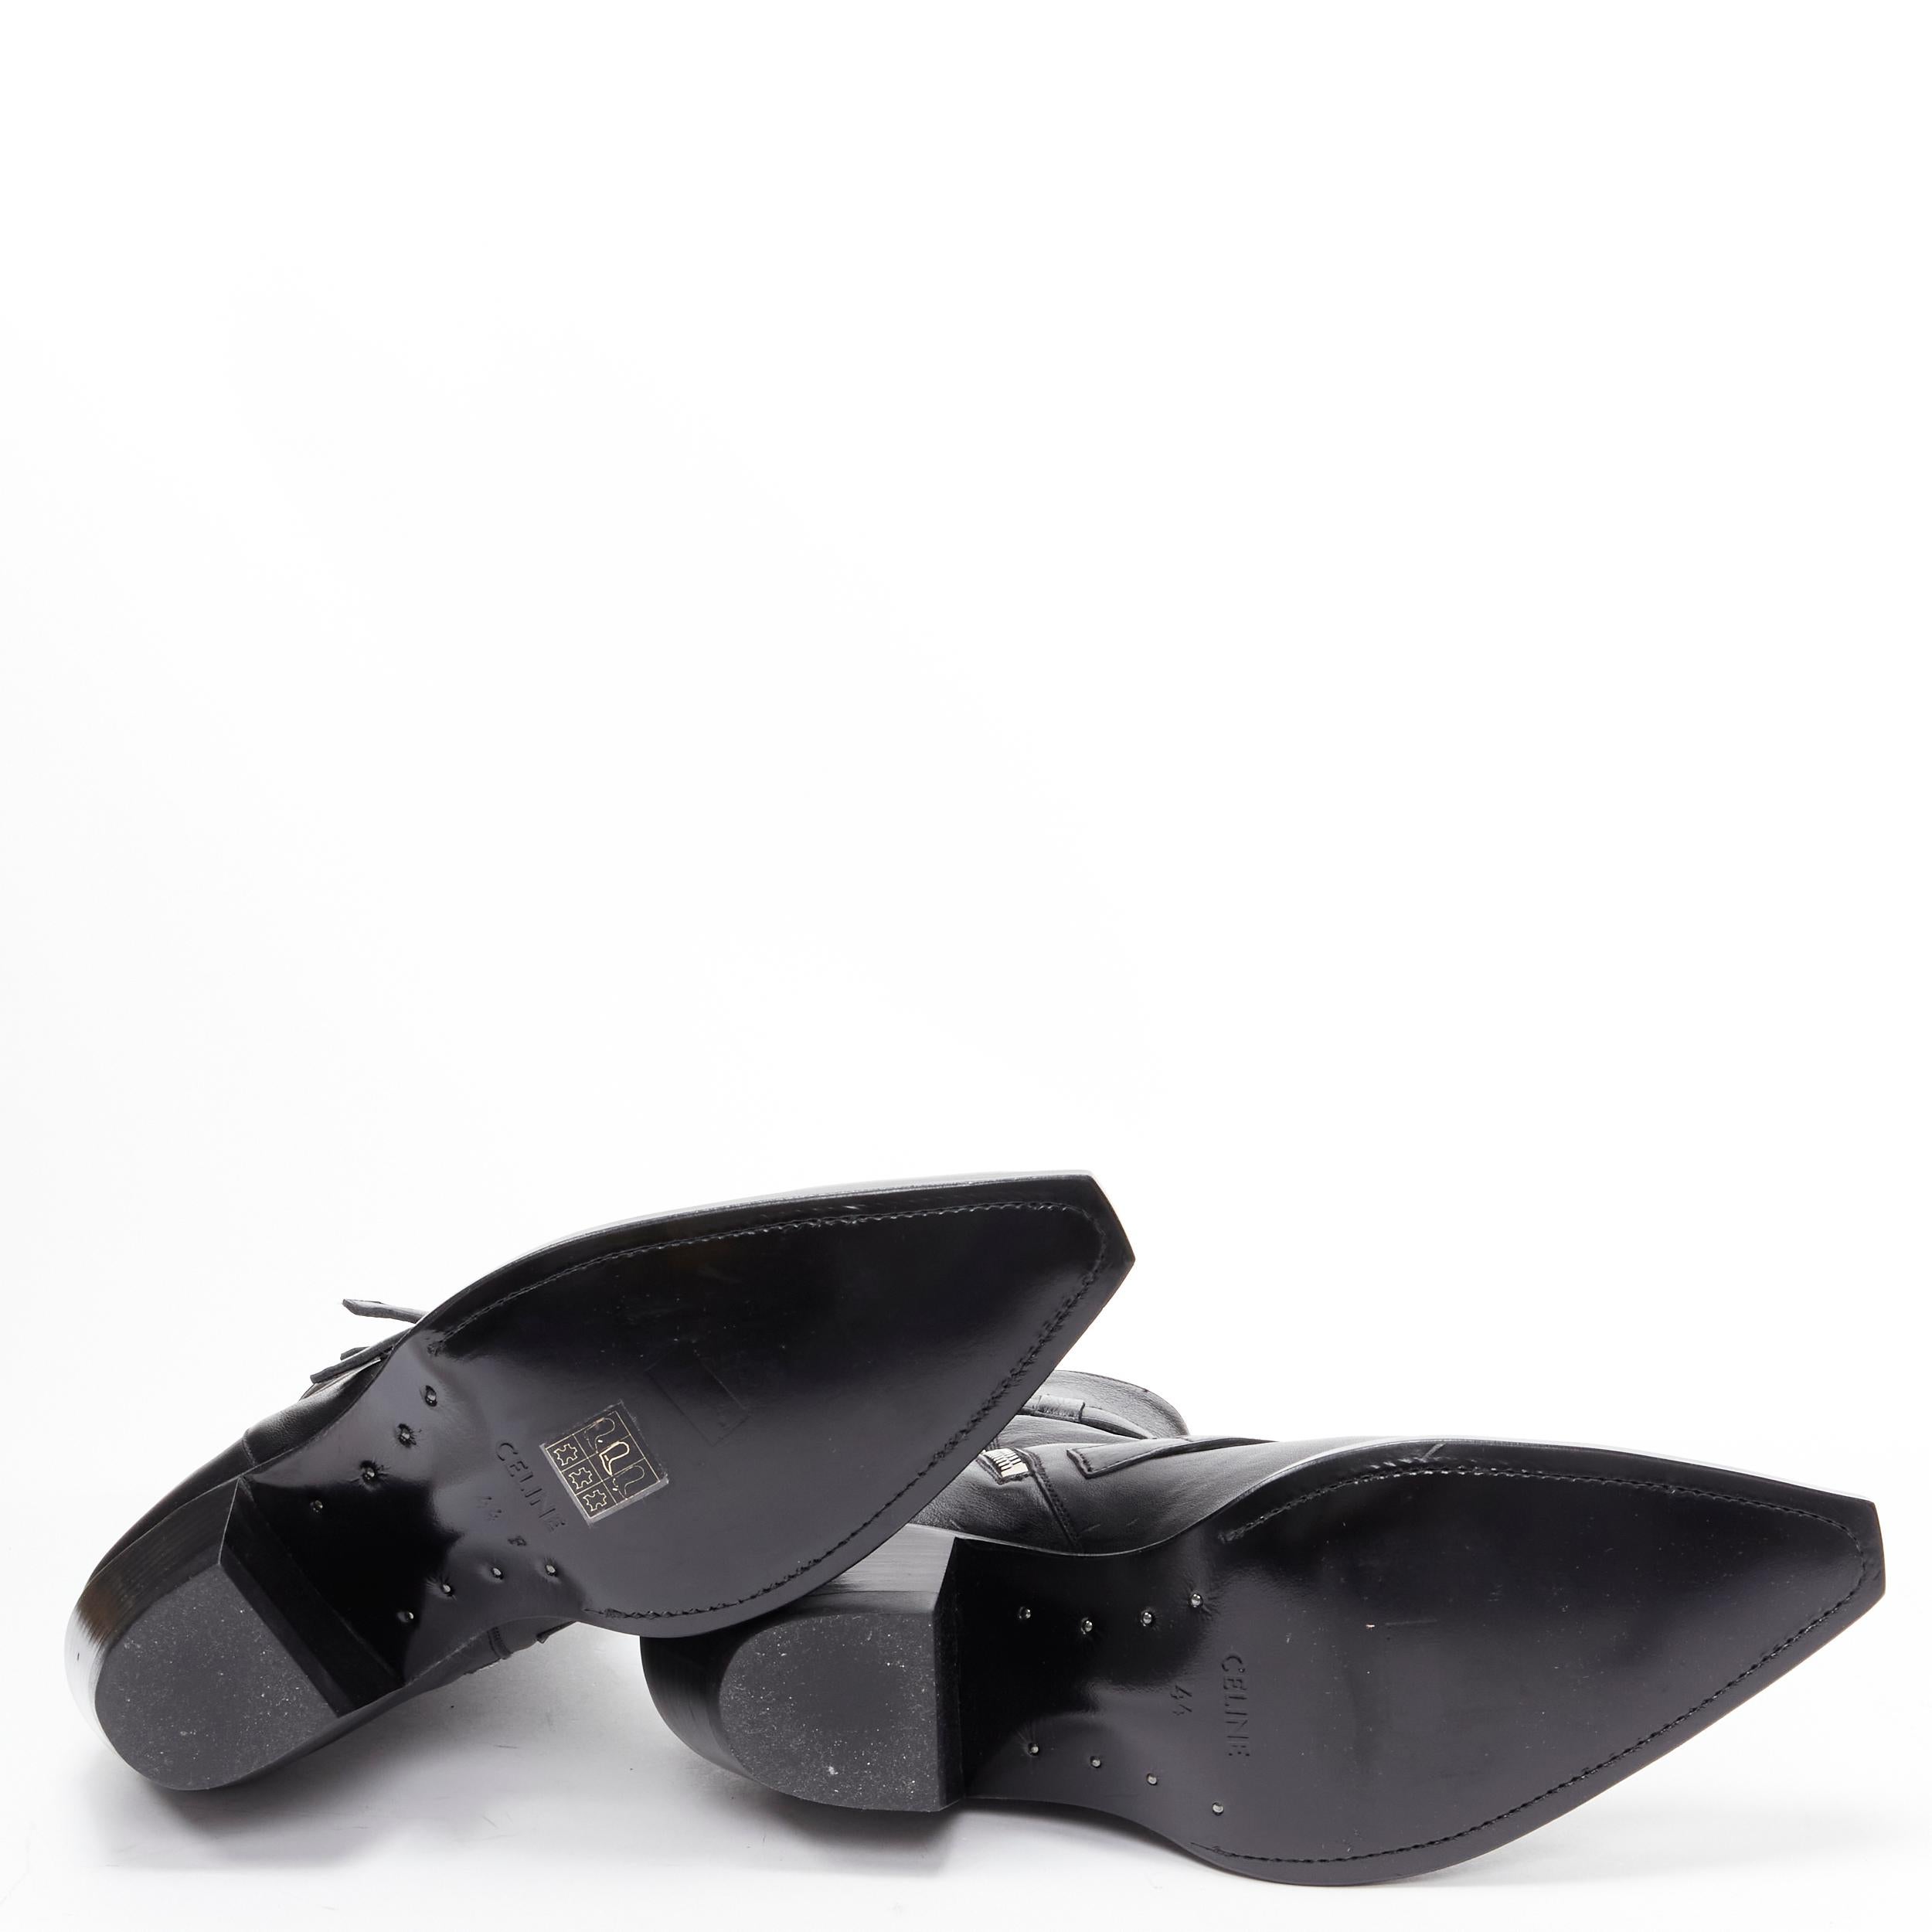 new CELINE Hedi Slimane 2019 Berlin black leather buckle western ankle boot EU44 5